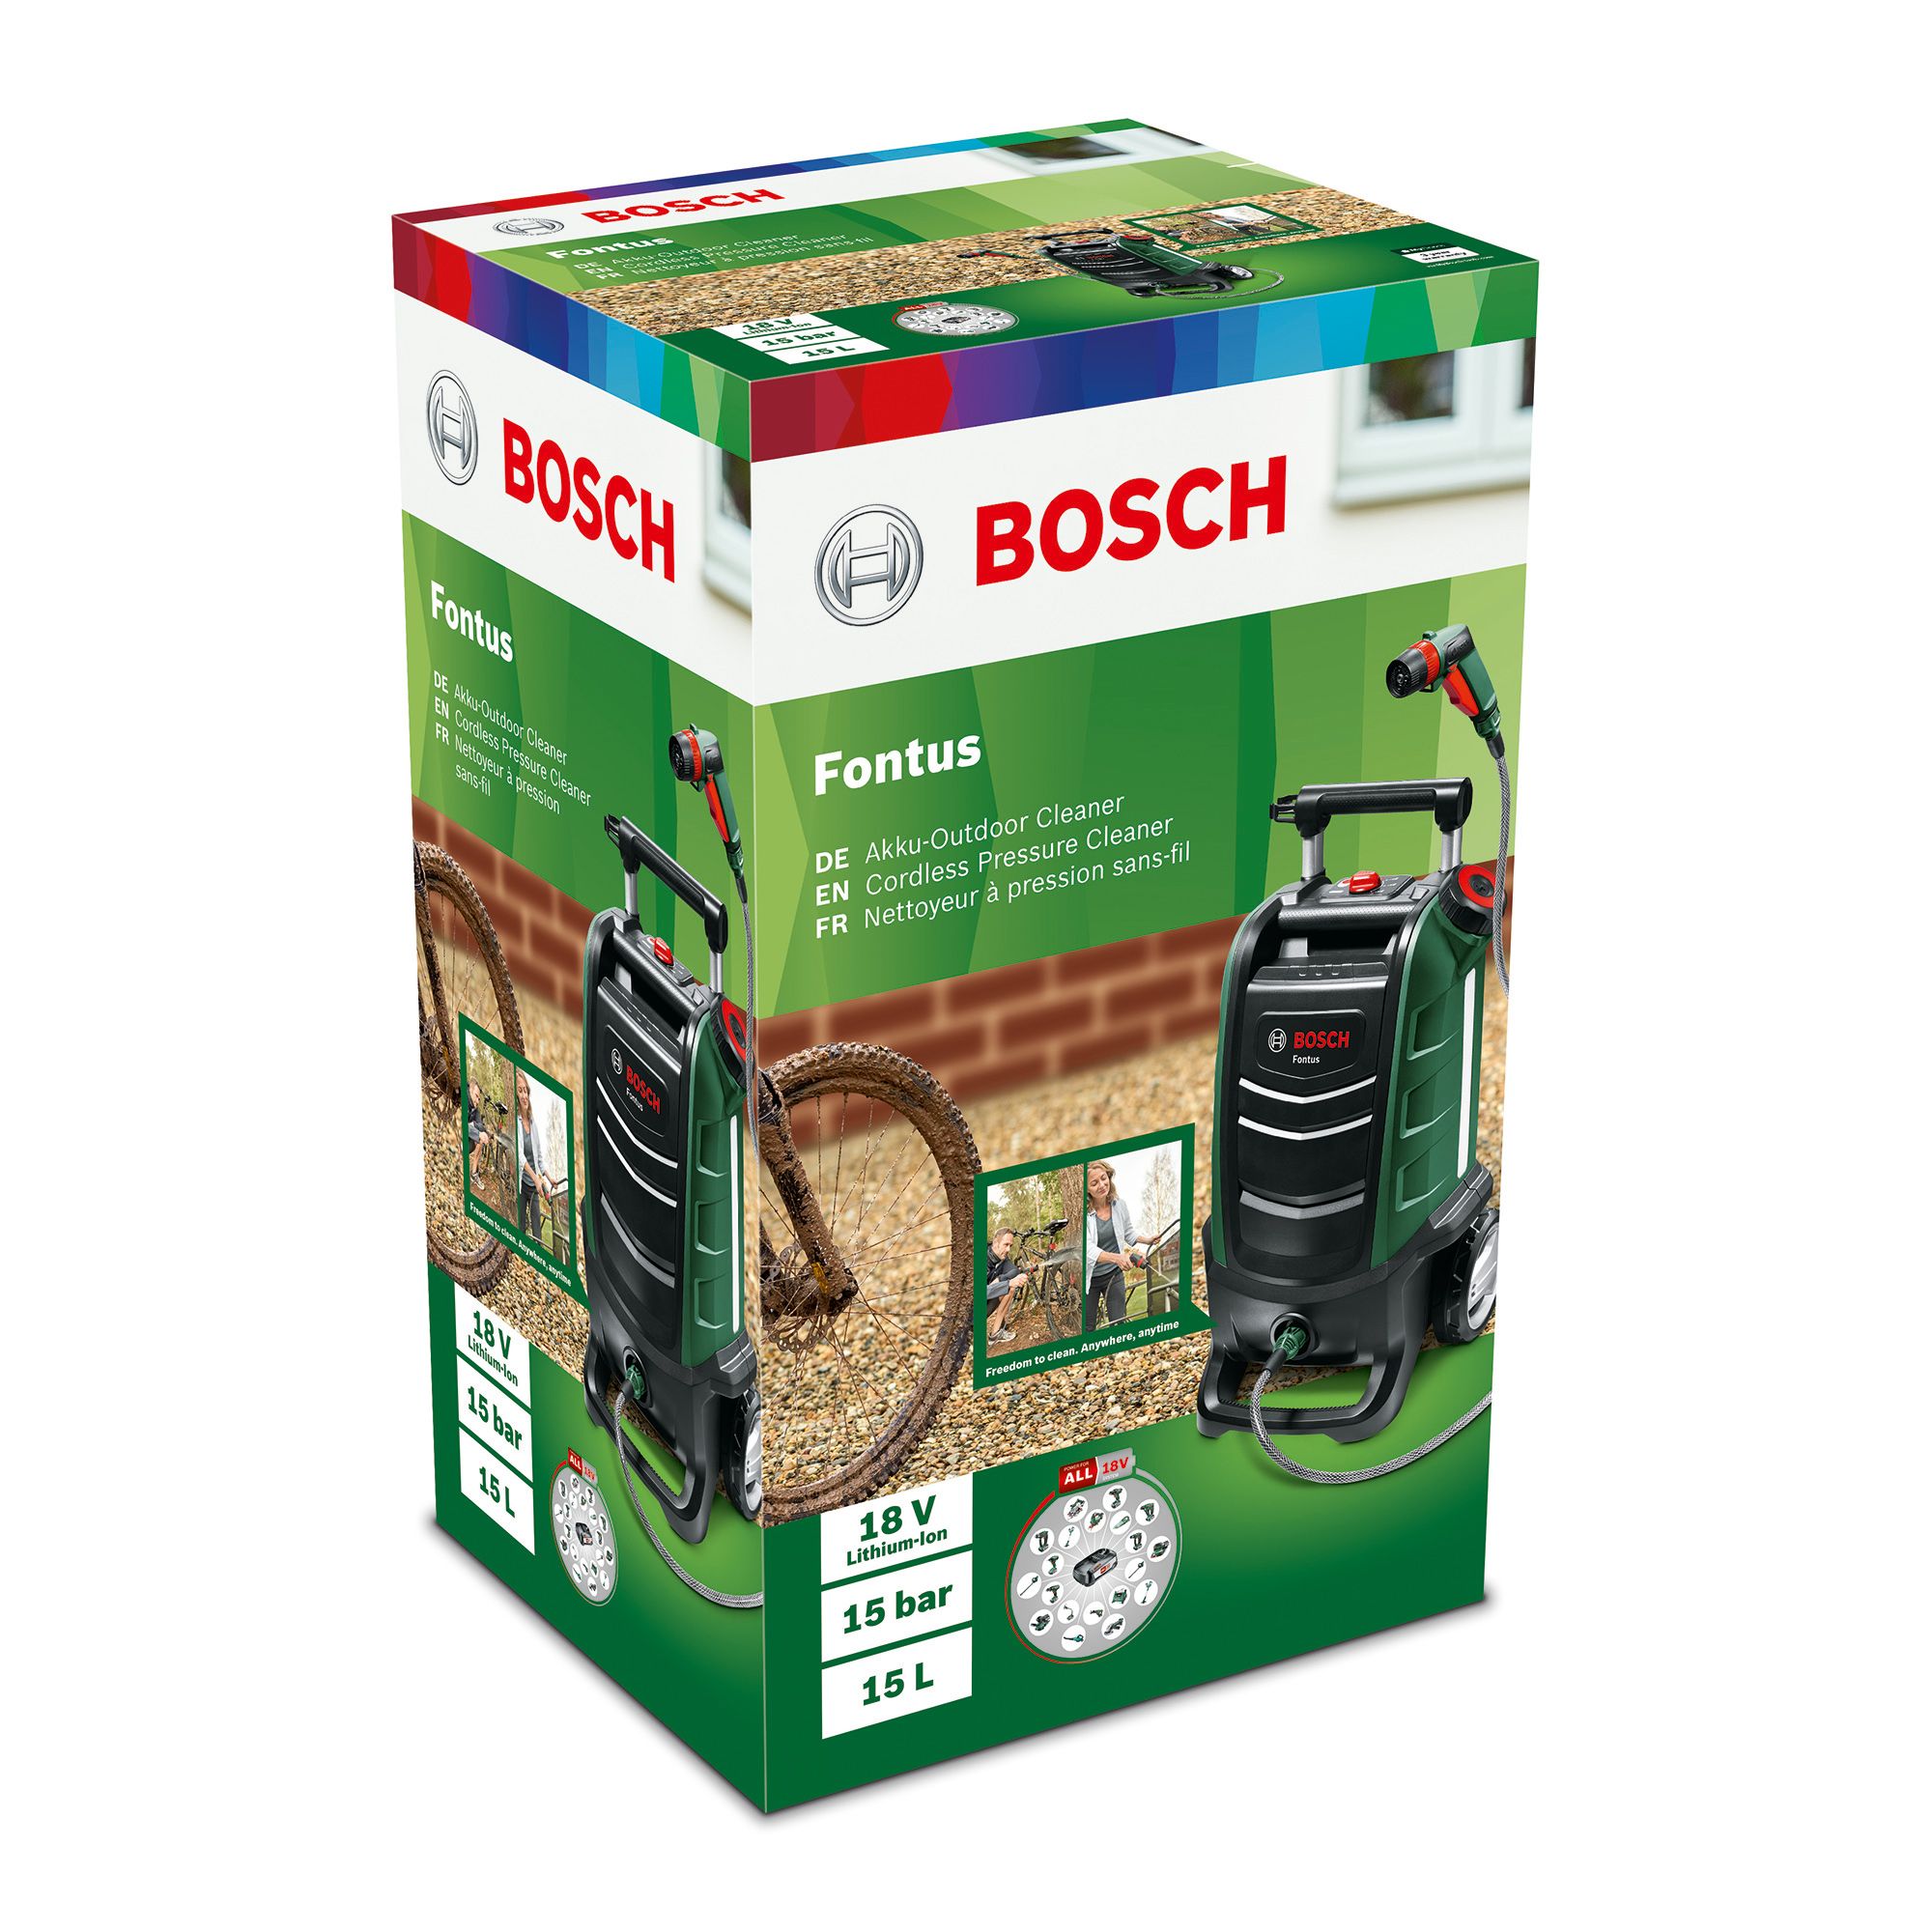 Bosch Power for all Cordless 18V Pressure washer